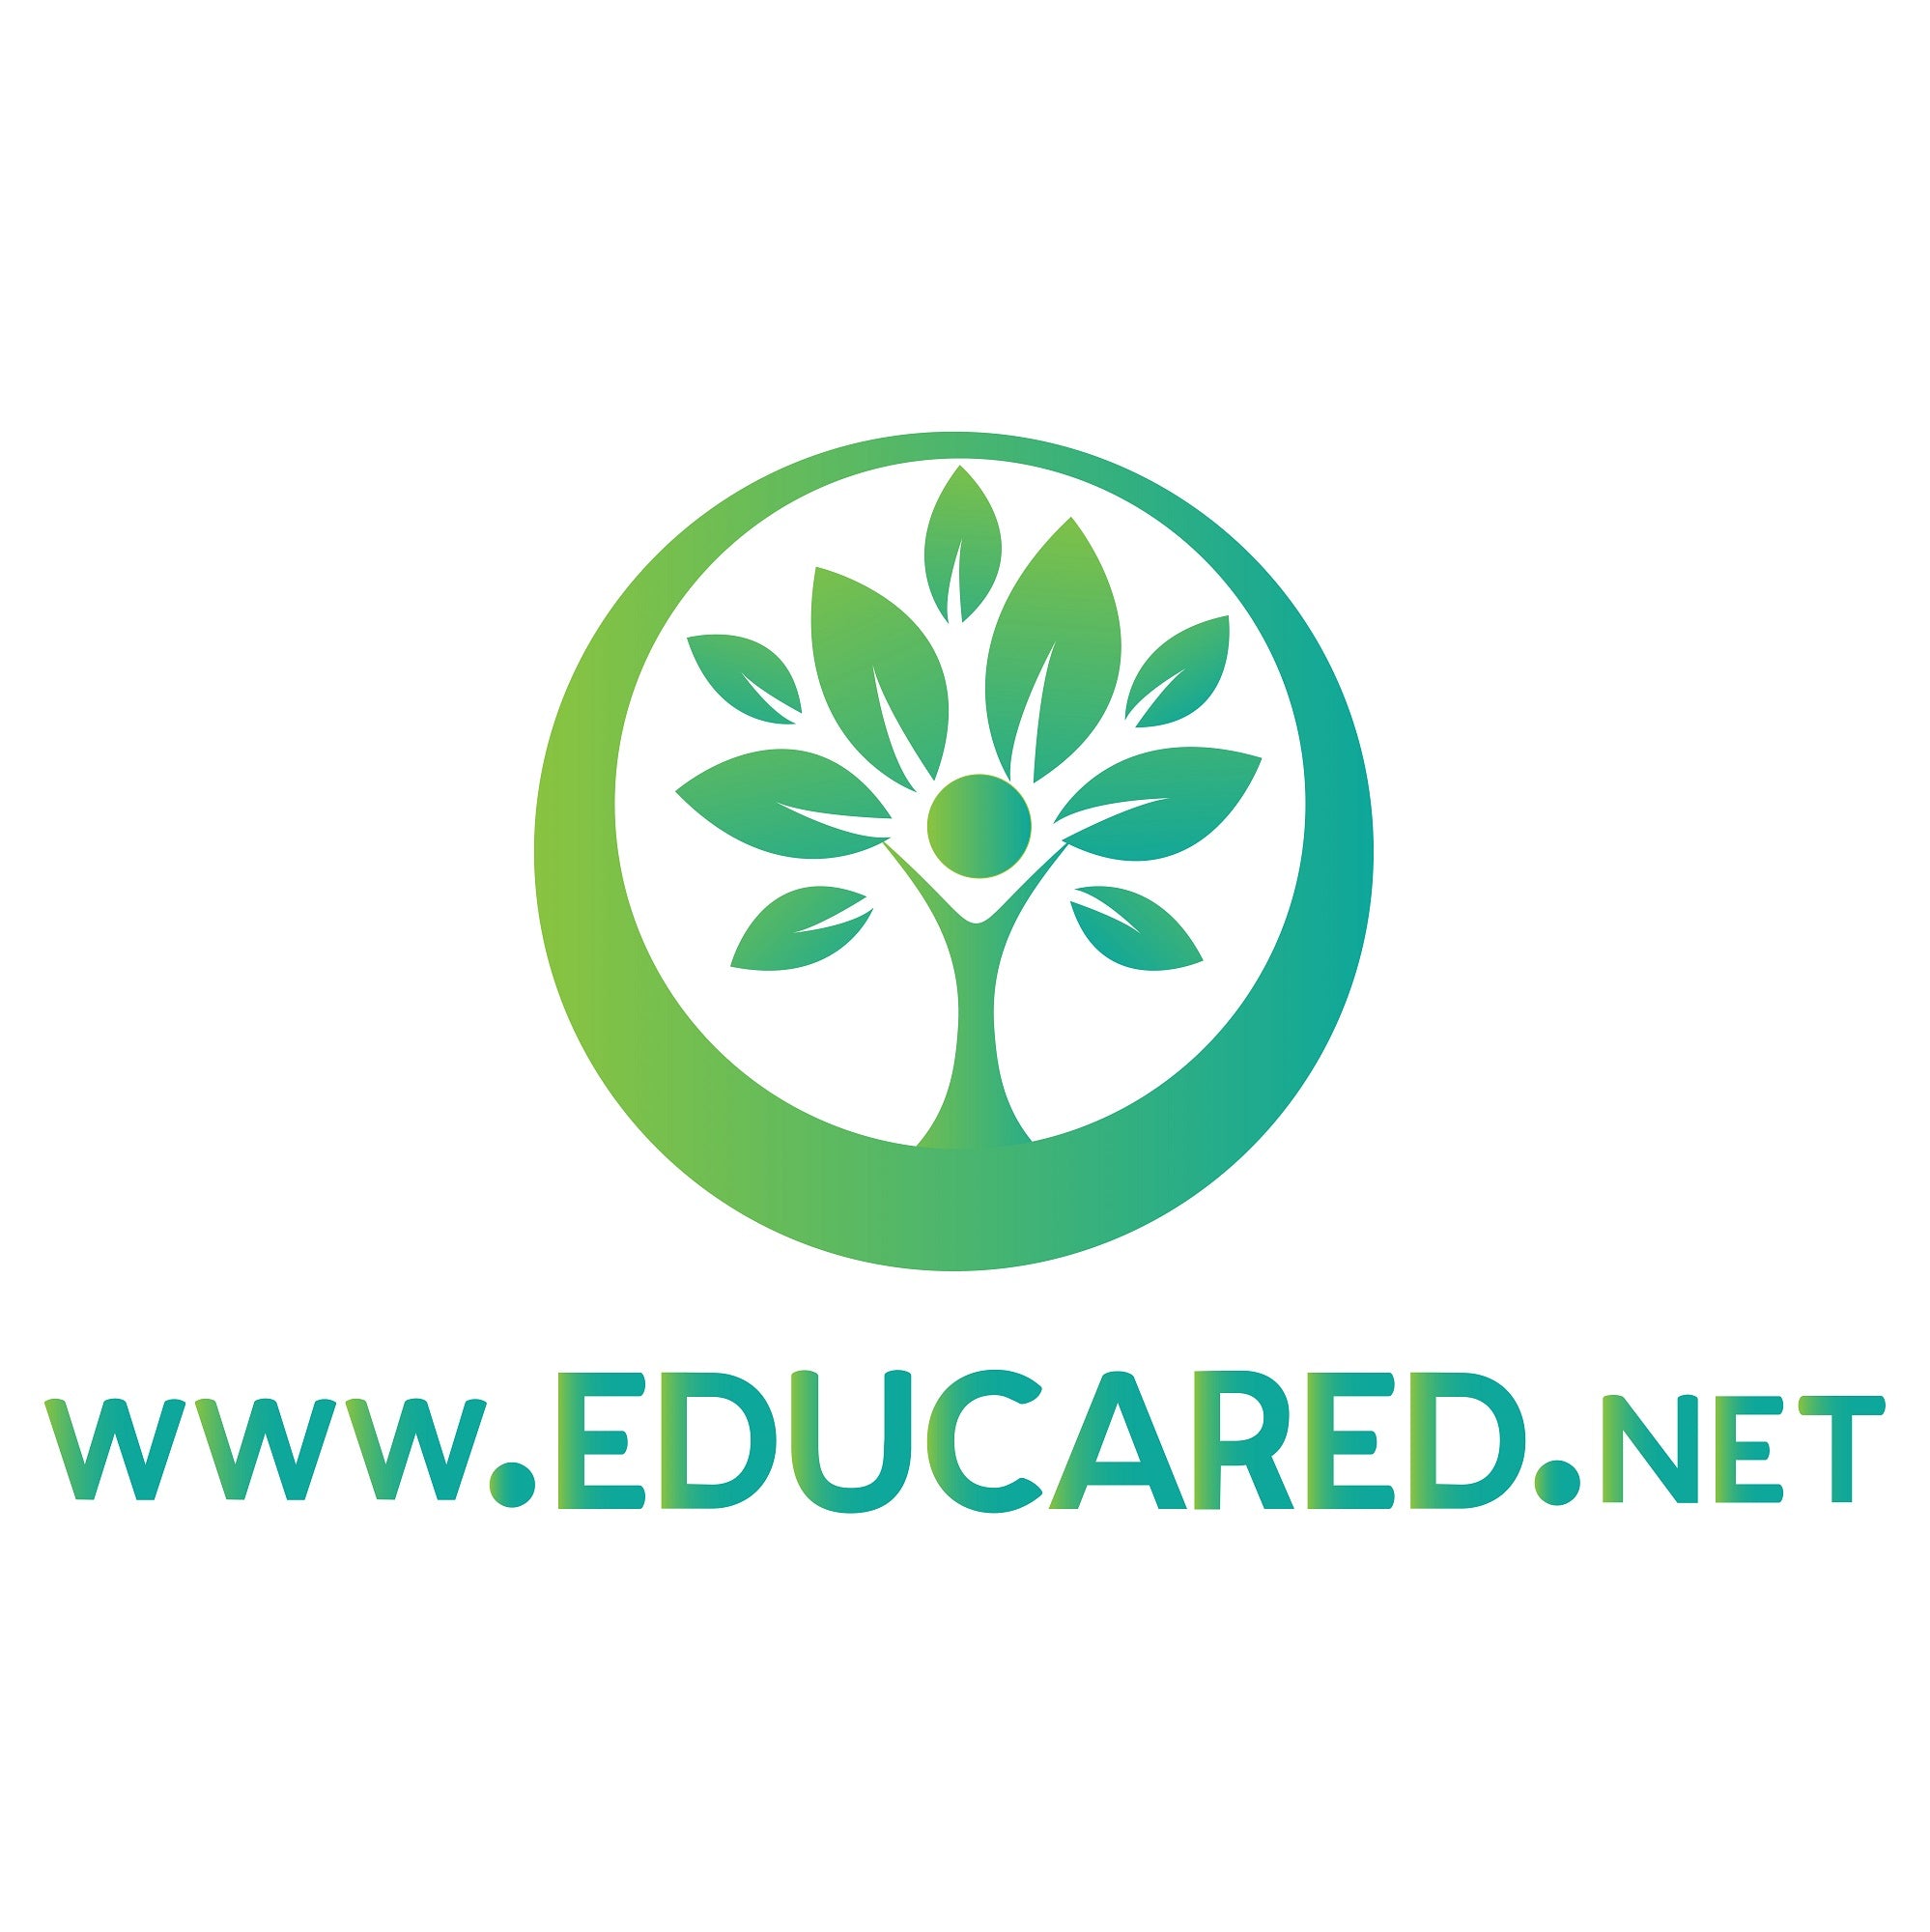 educared.net